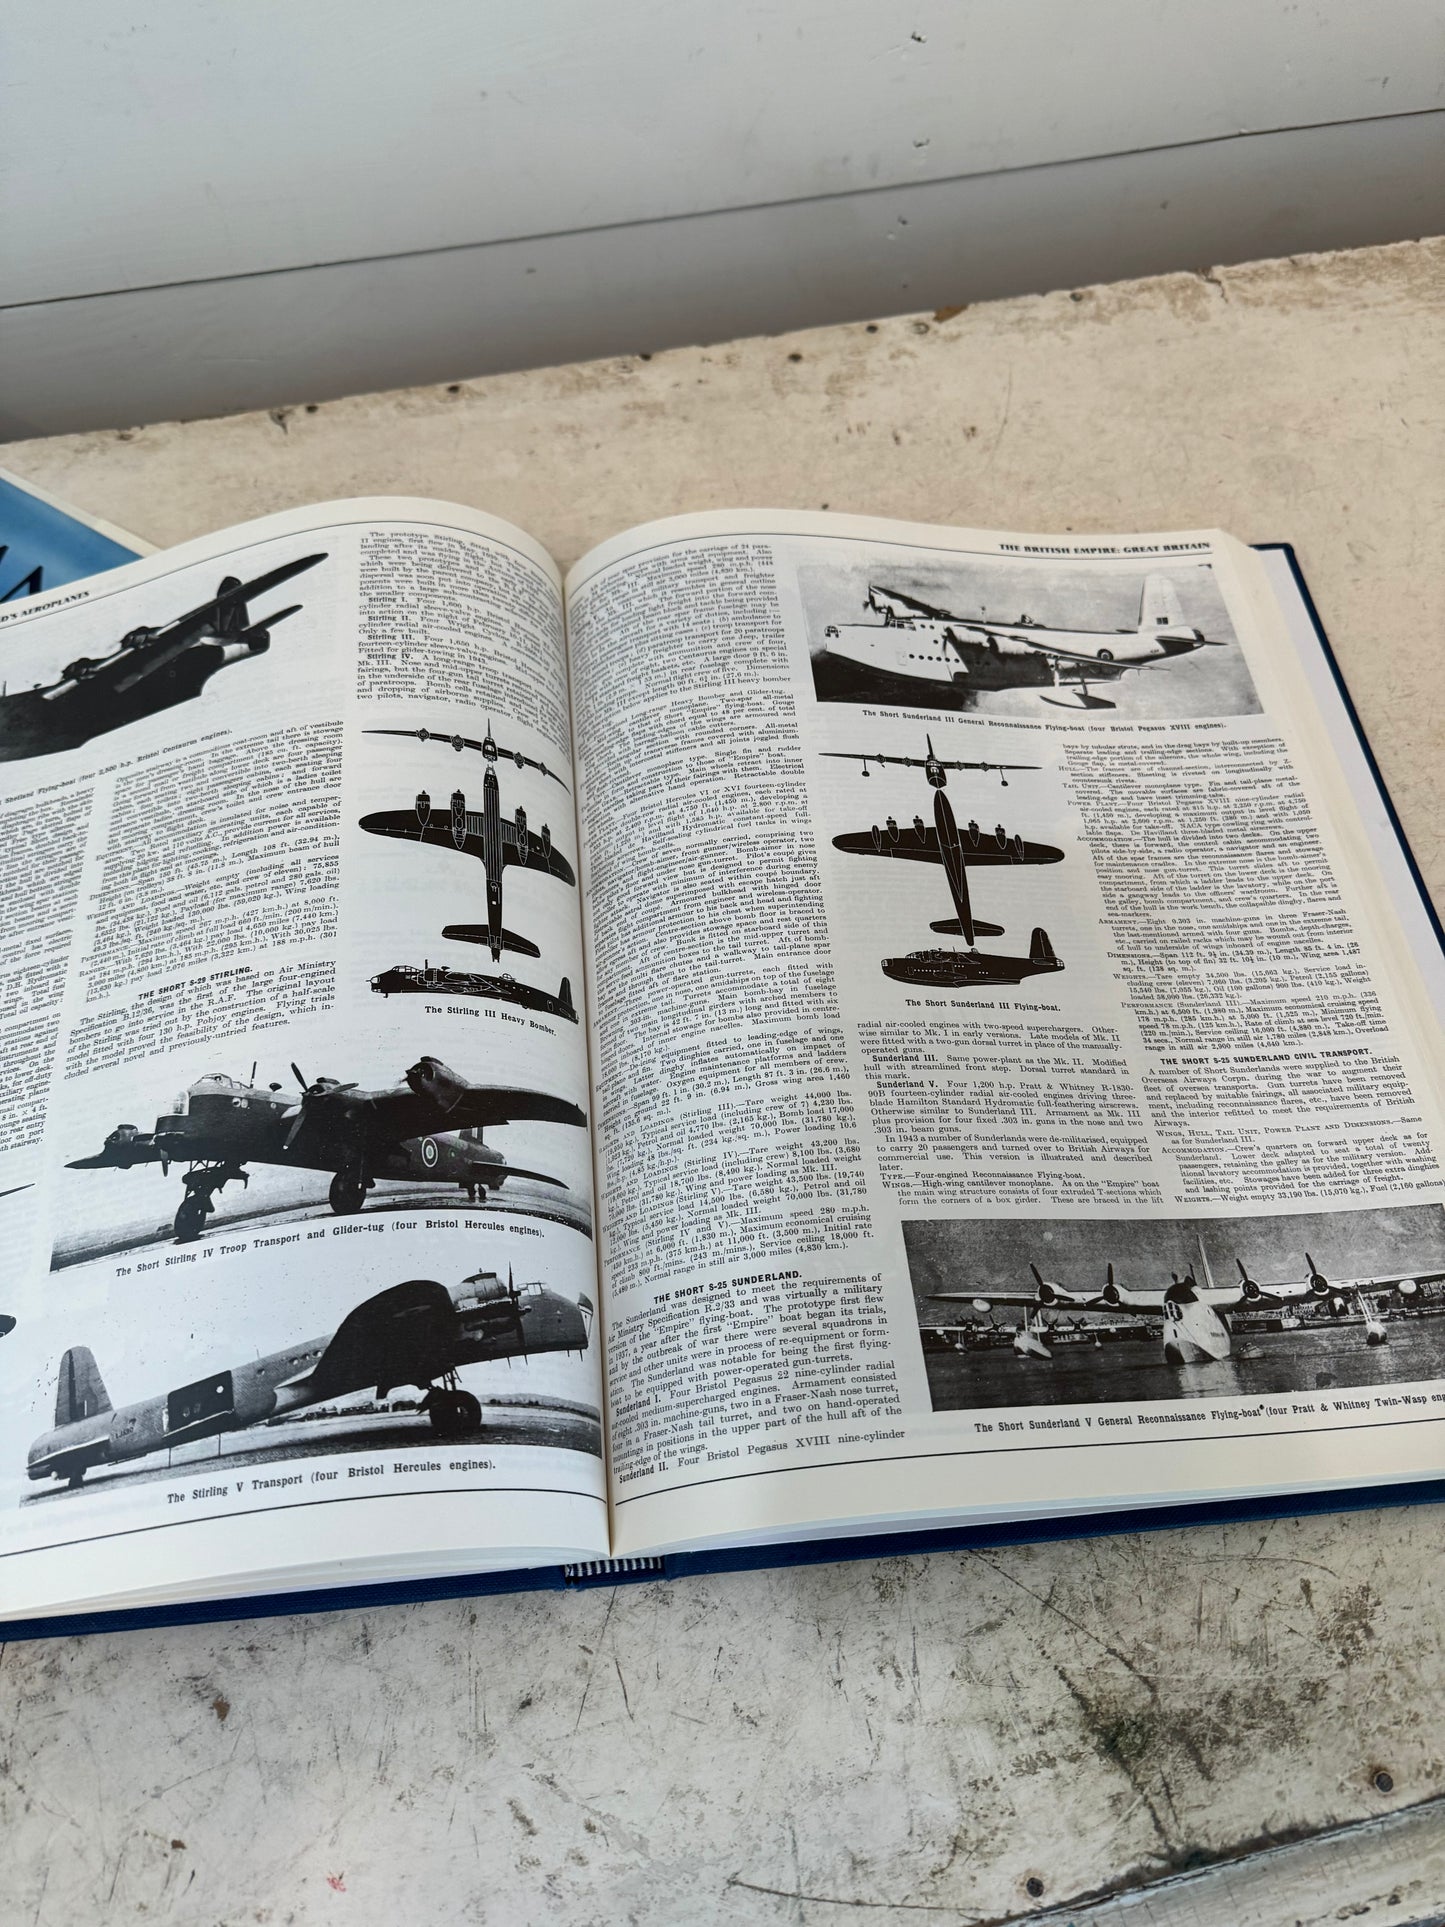 Jane's Fighting Aircraft of World War II by Leonard Bridgman